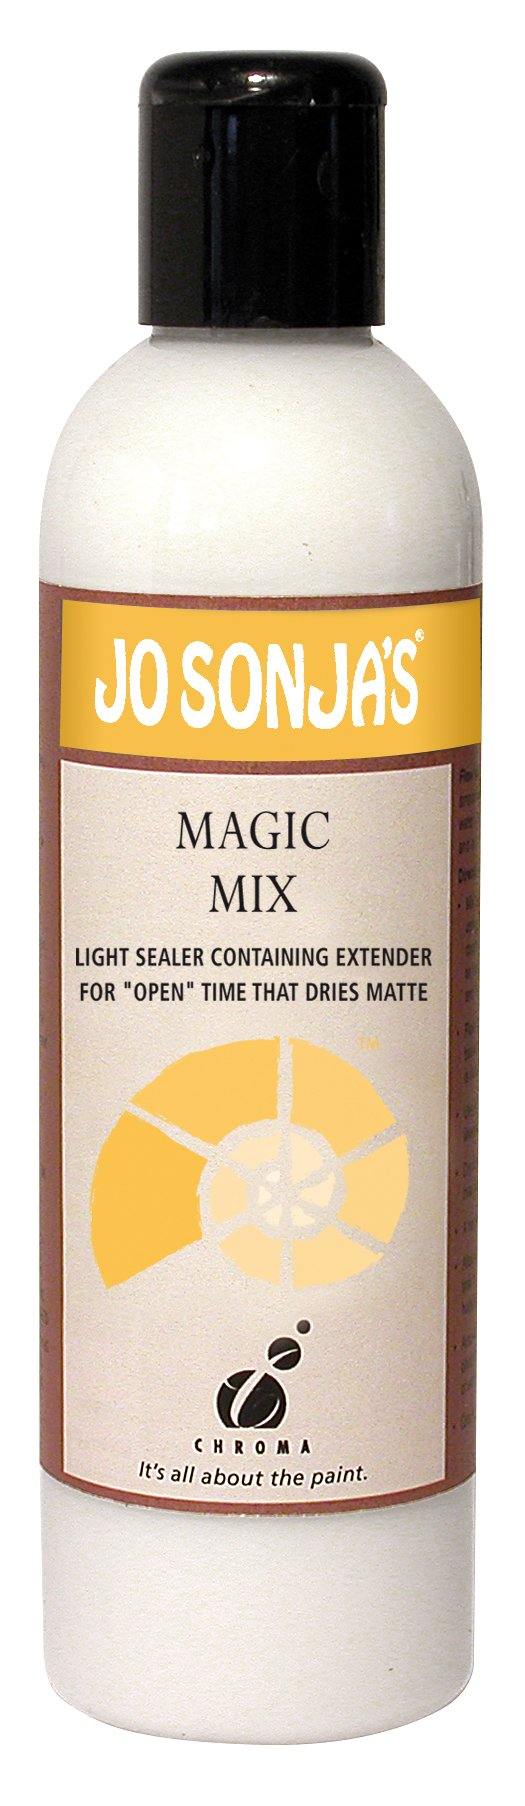 Jo Sonja's Magic Mix 250ml - Art Supplies Australia